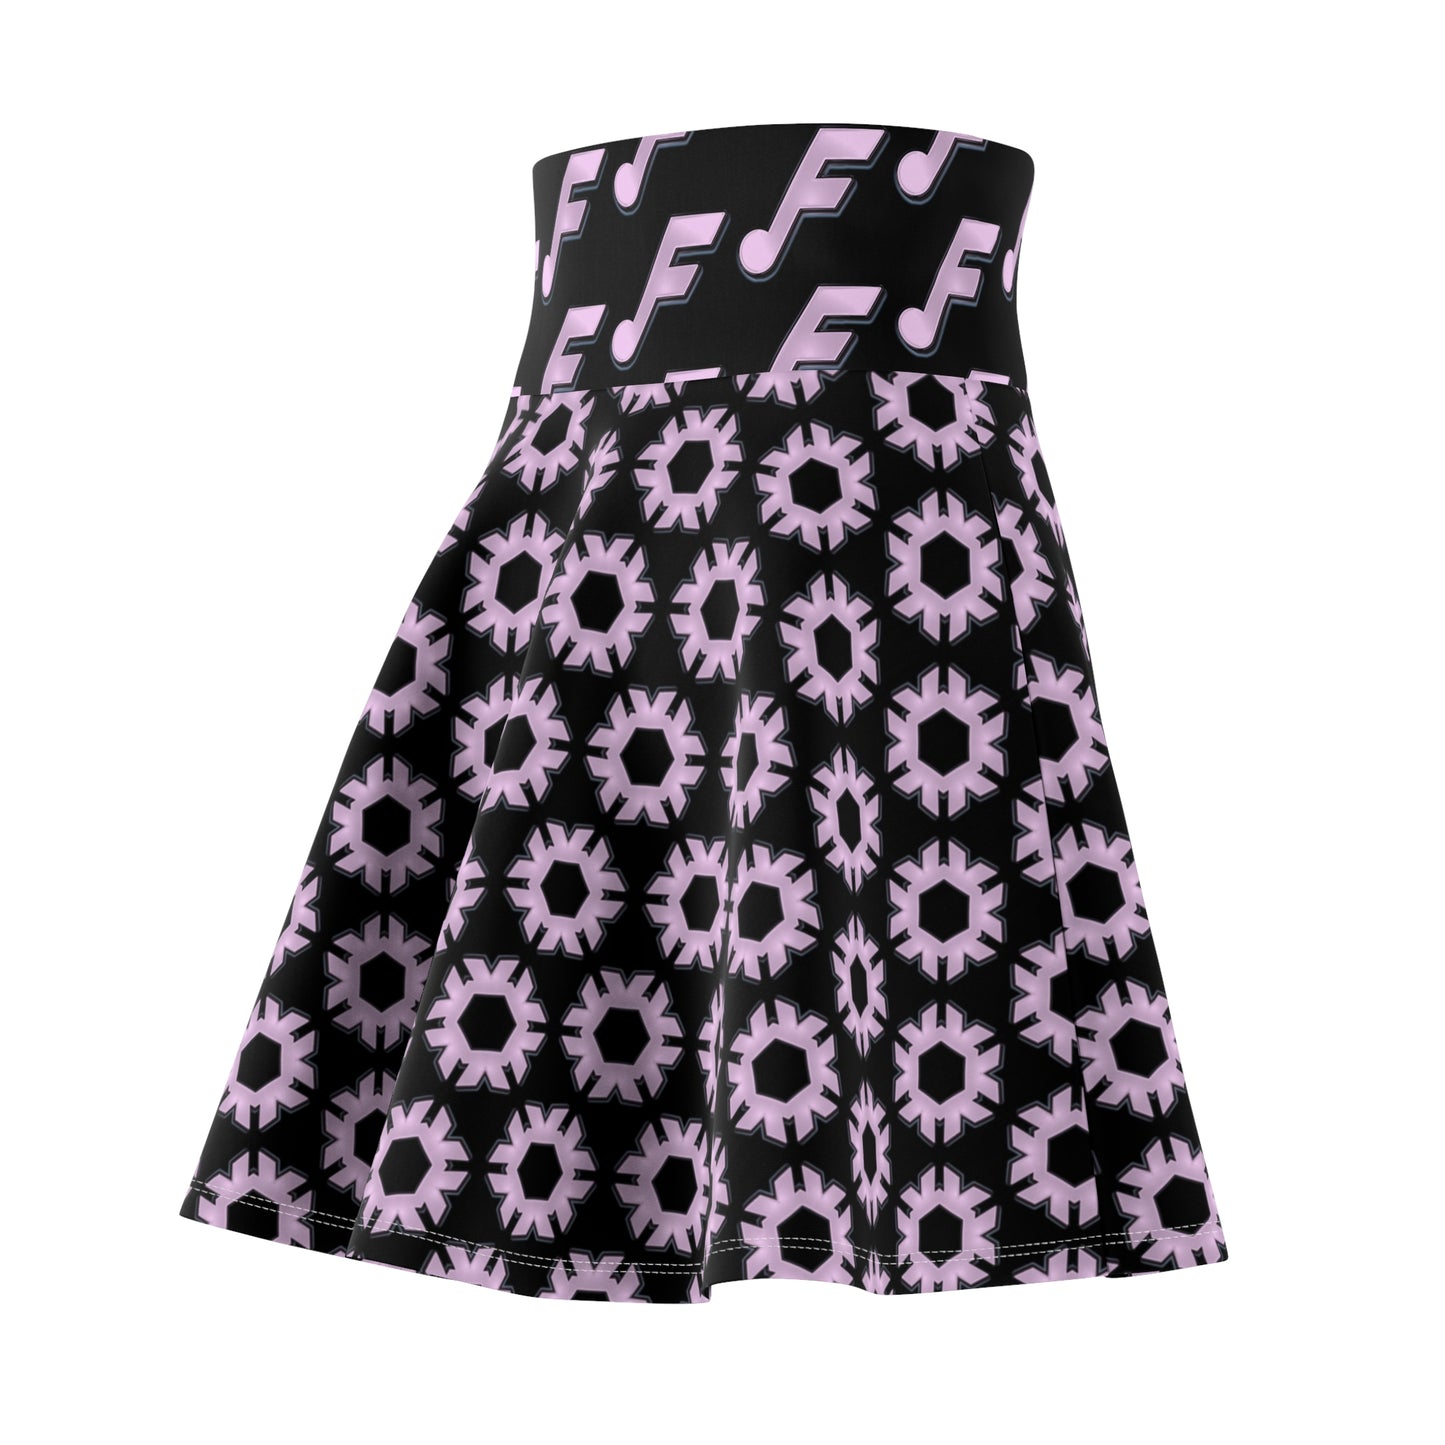 Frettnote Winter Edition Skirt